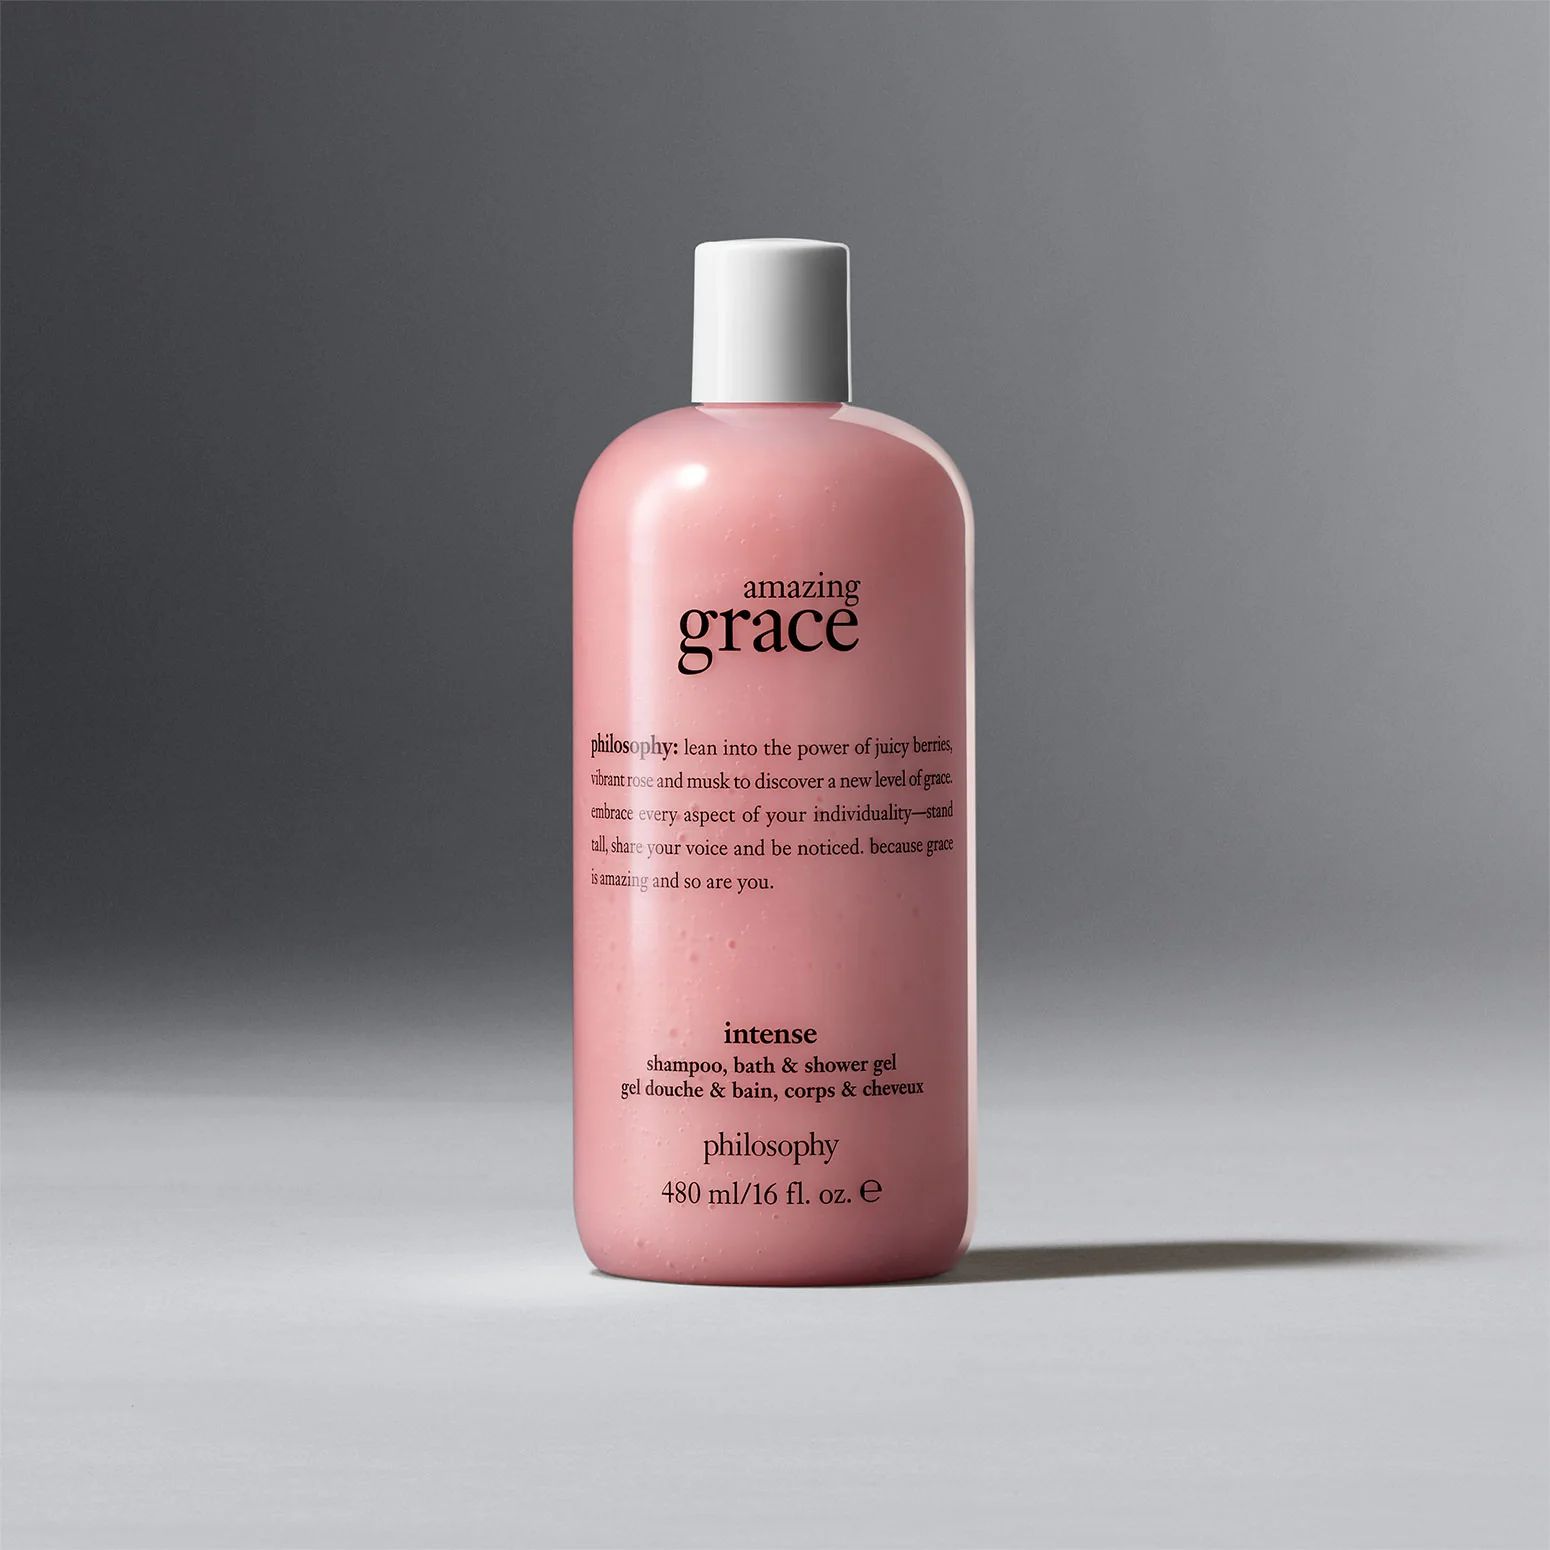 amazing grace intense shampoo, bath & shower gel | Philosophy